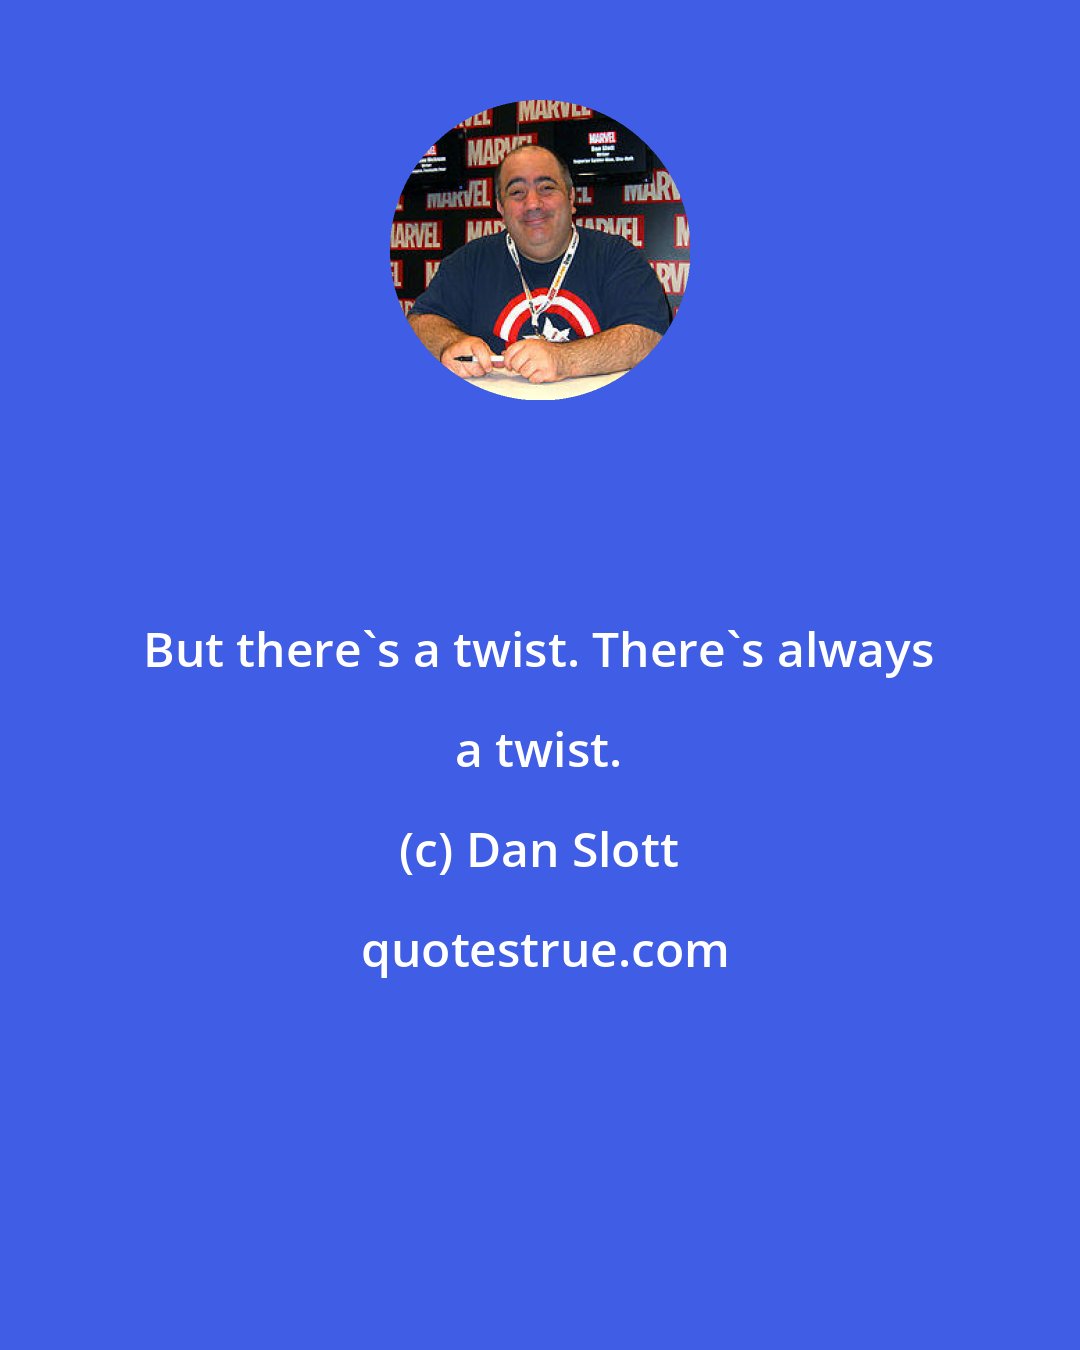 Dan Slott: But there's a twist. There's always a twist.